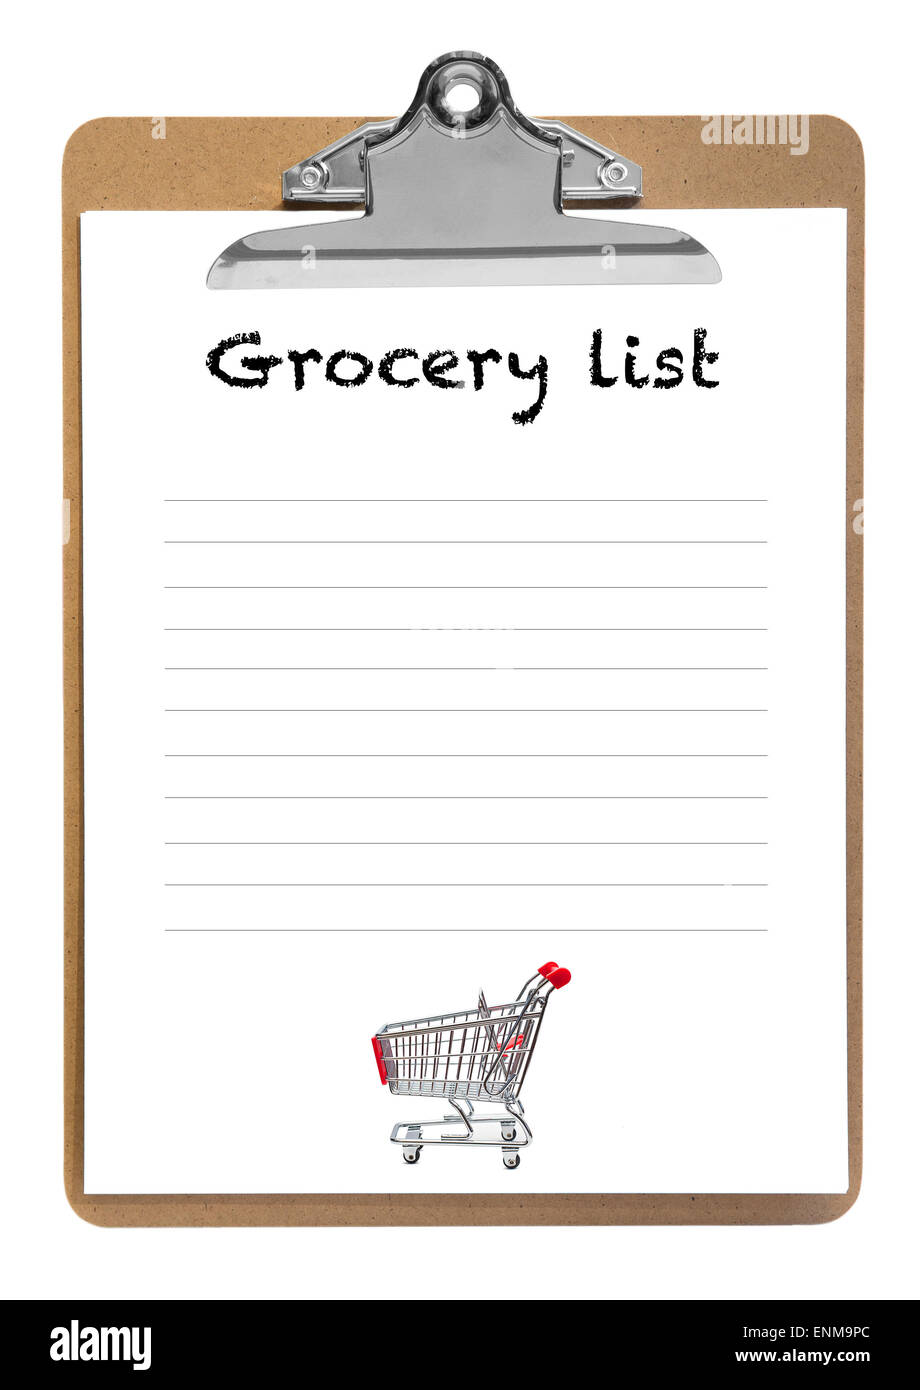 grocery list Stock Photo